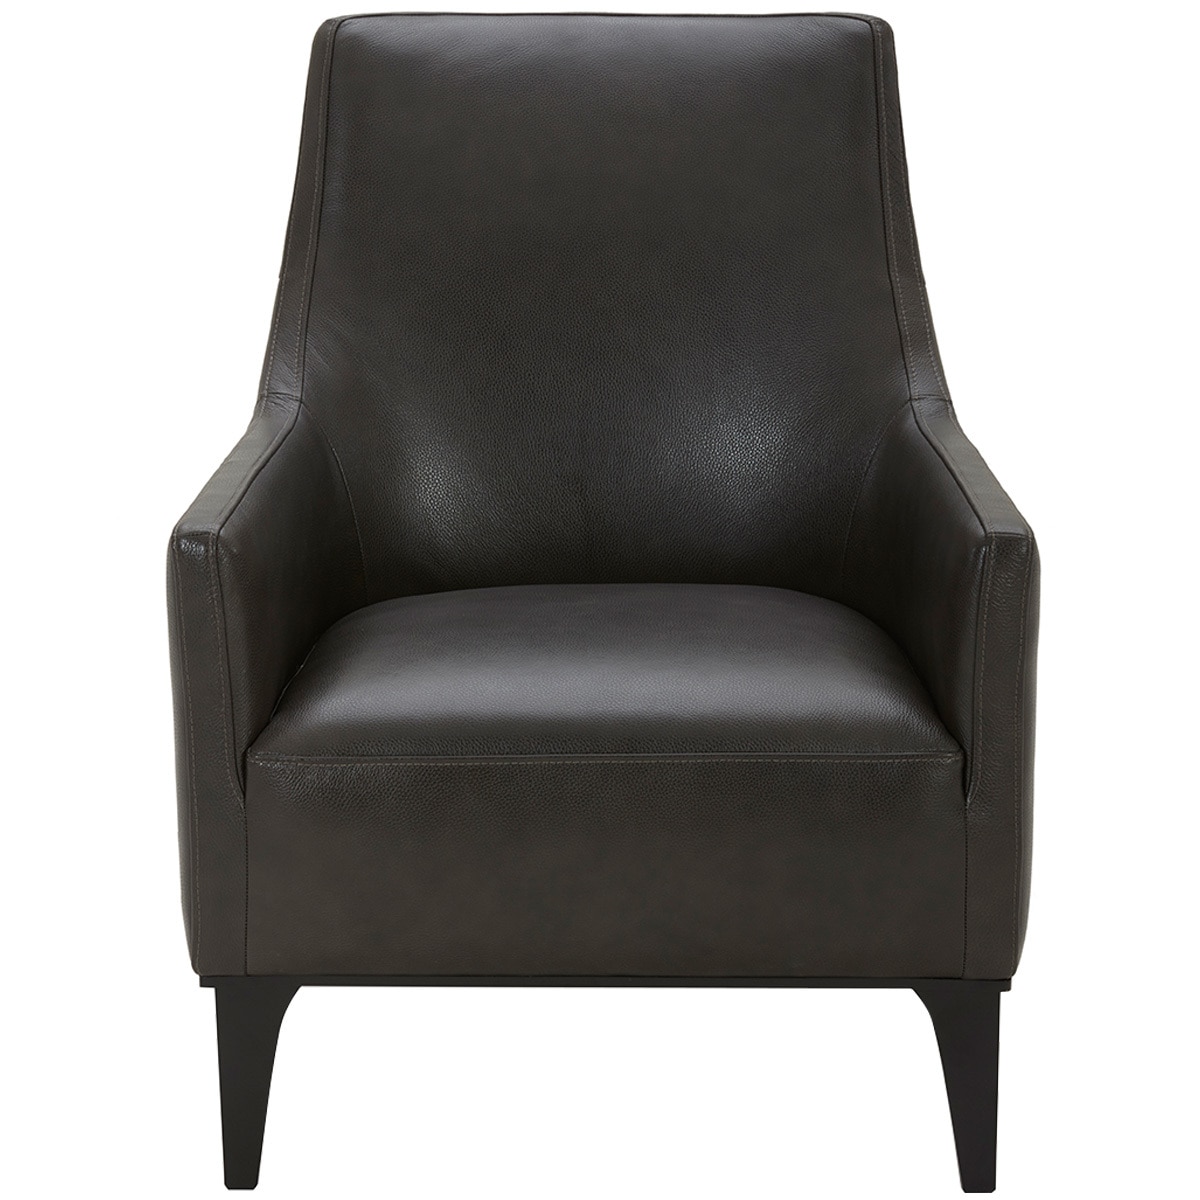 Kuka Tan Leather Accent Chair Dark Grey L1315 Costco